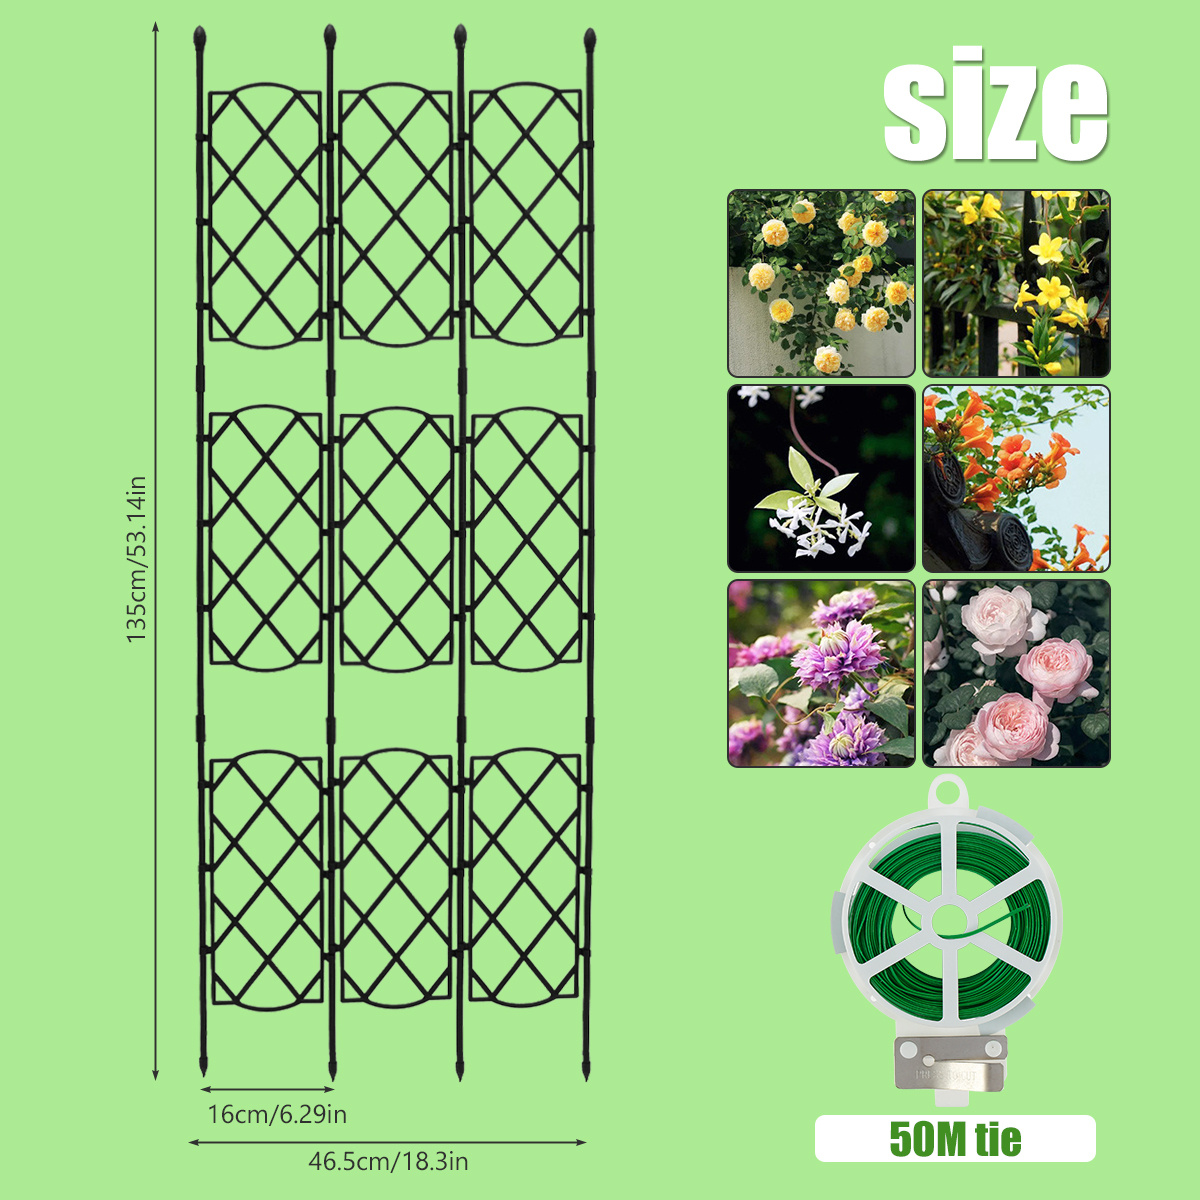 2x Treillage Jardin Brun 180x107cm Support Plantes grimpantes